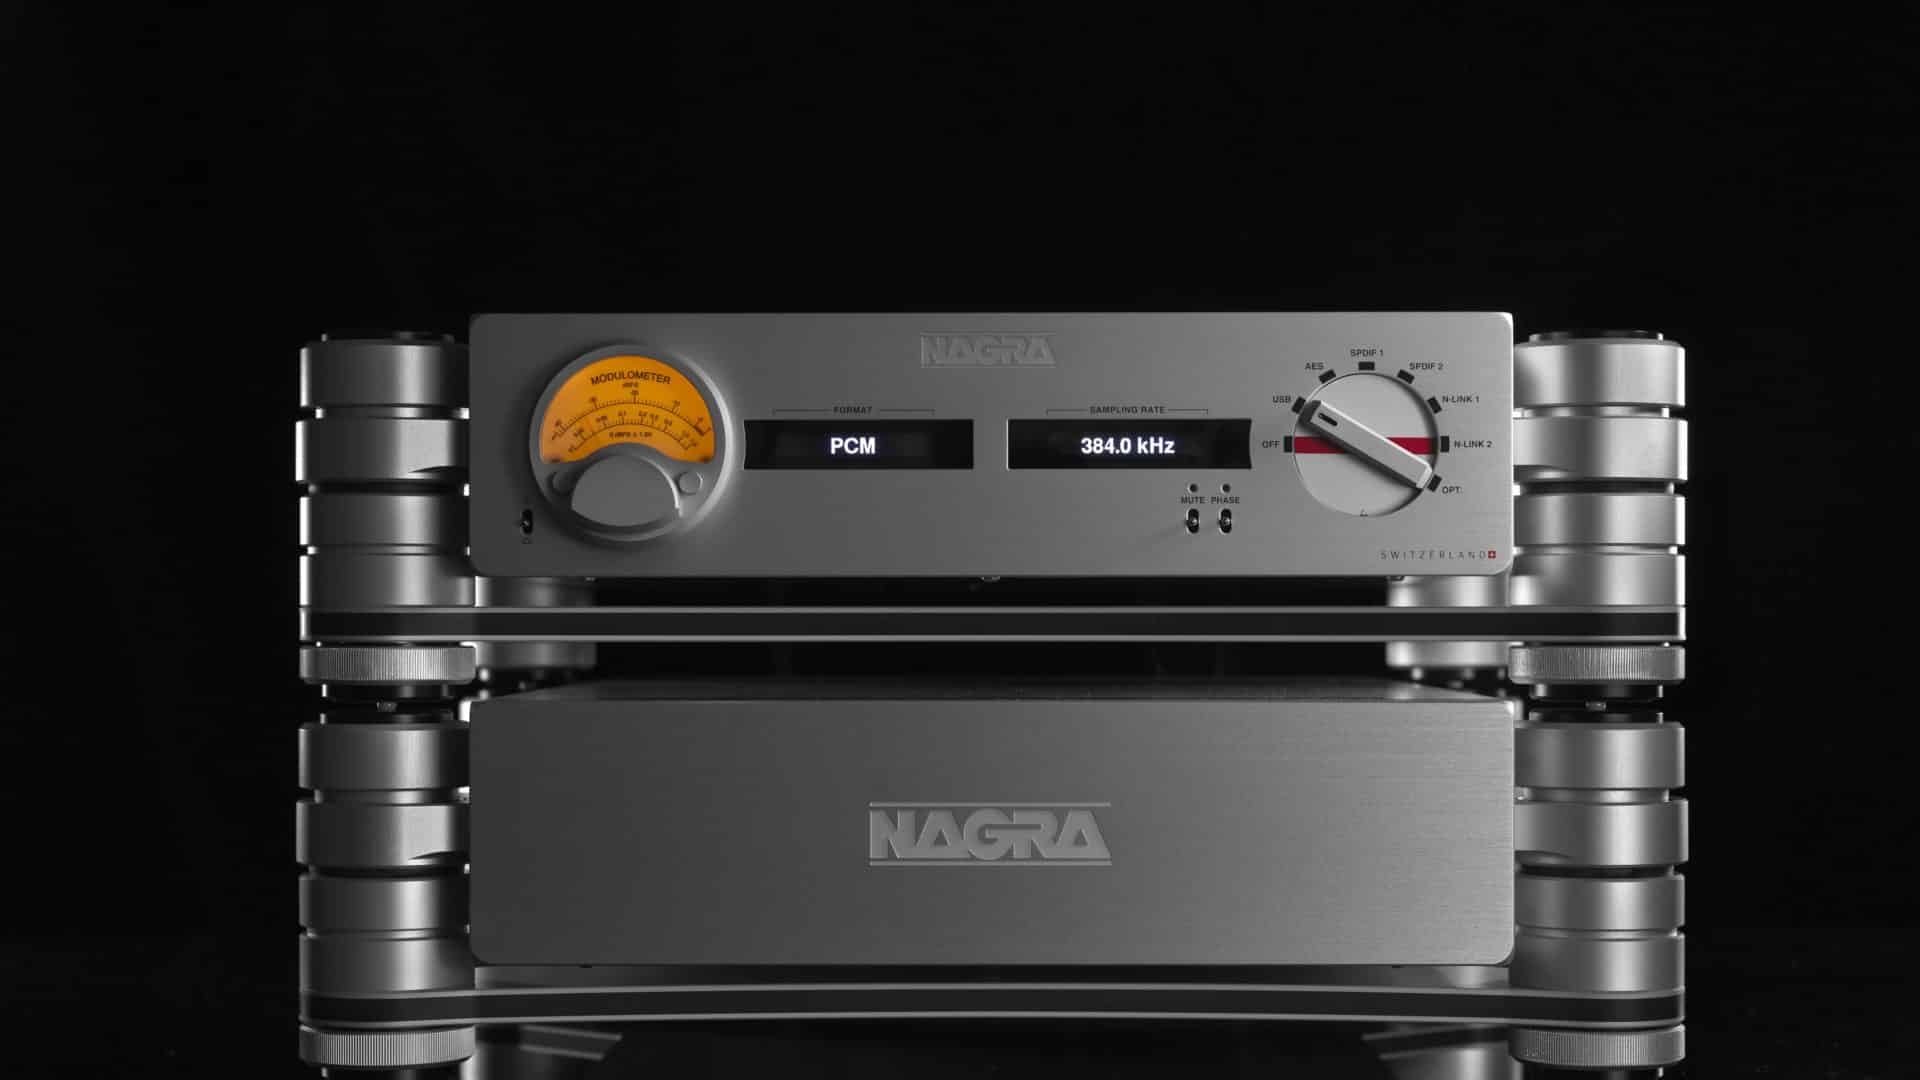 HD DAC X HD PSU front modulometer peclette da converter analog ditigal